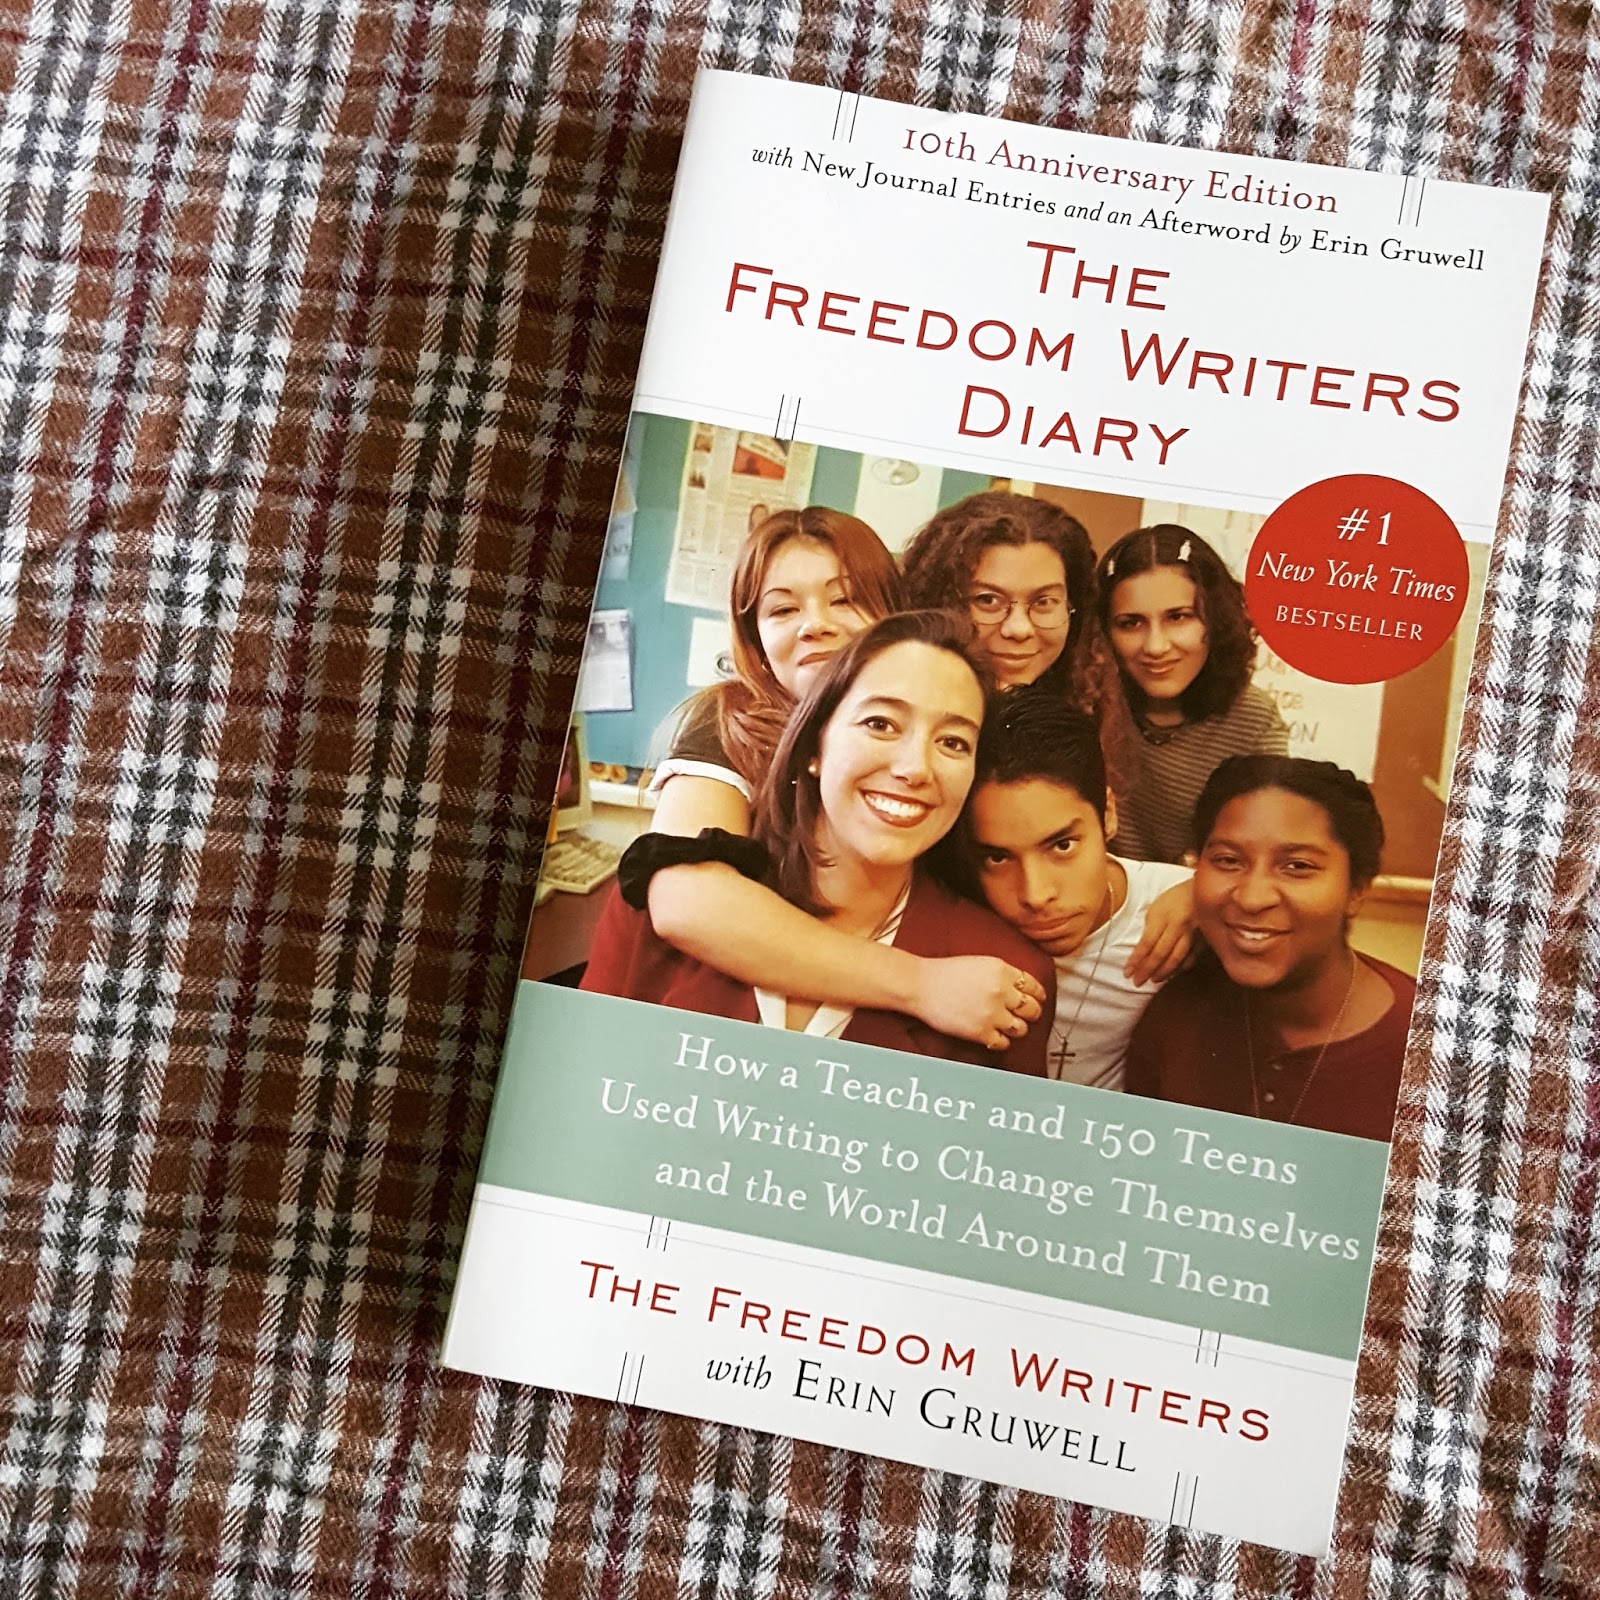 Freedom книги. Эрин Грувелл Писатели свободы. The Freedom writers Diary. The Freedom writers Diary книга. Дневник писателей свободы.